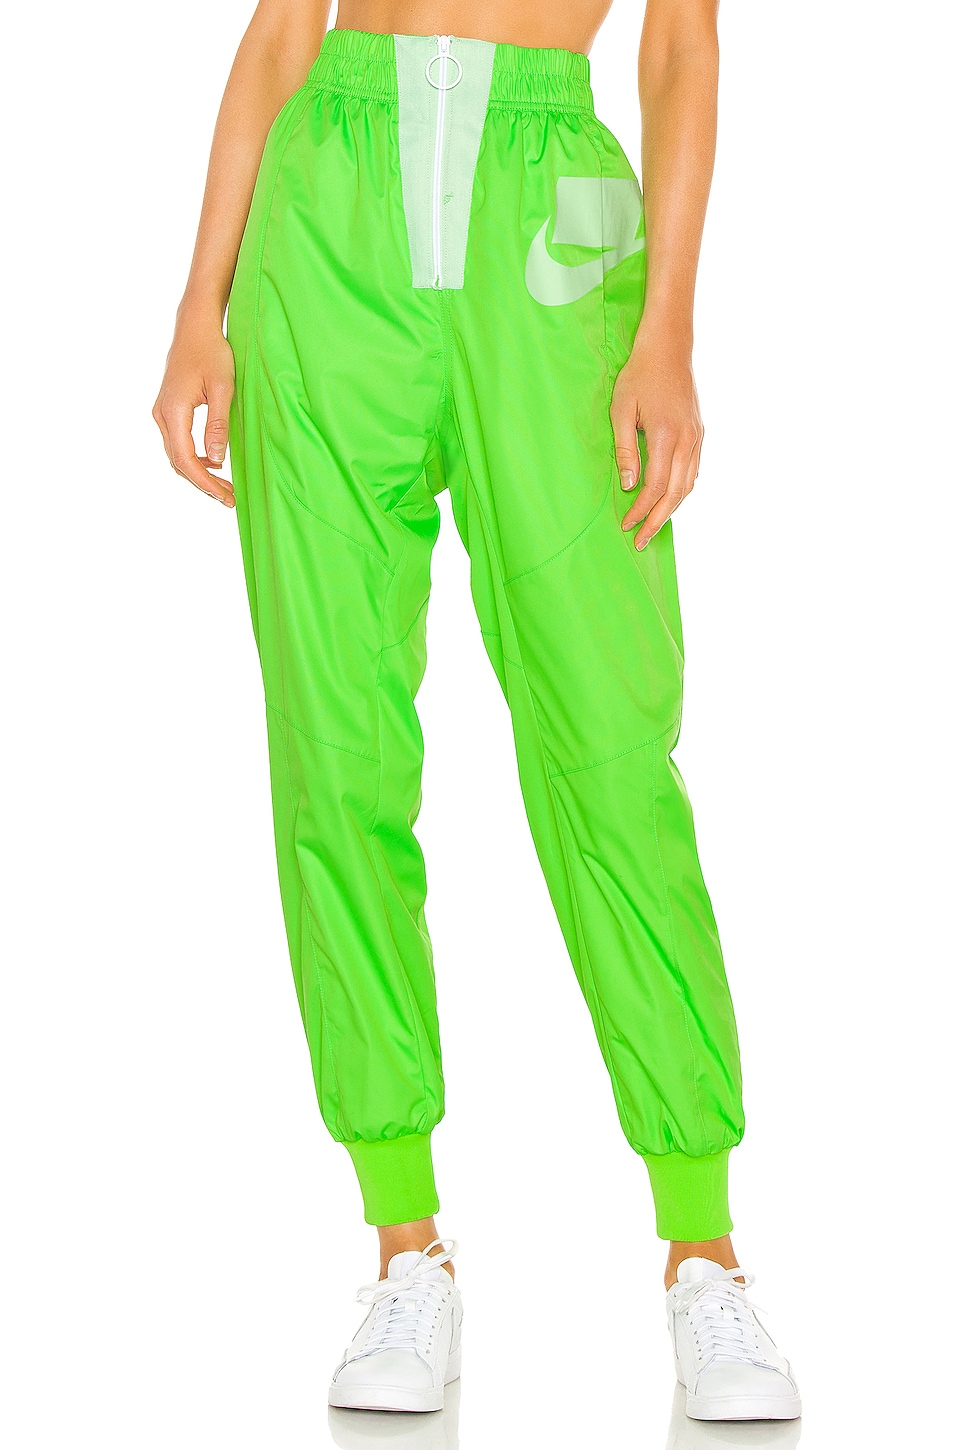 neon green nike pants